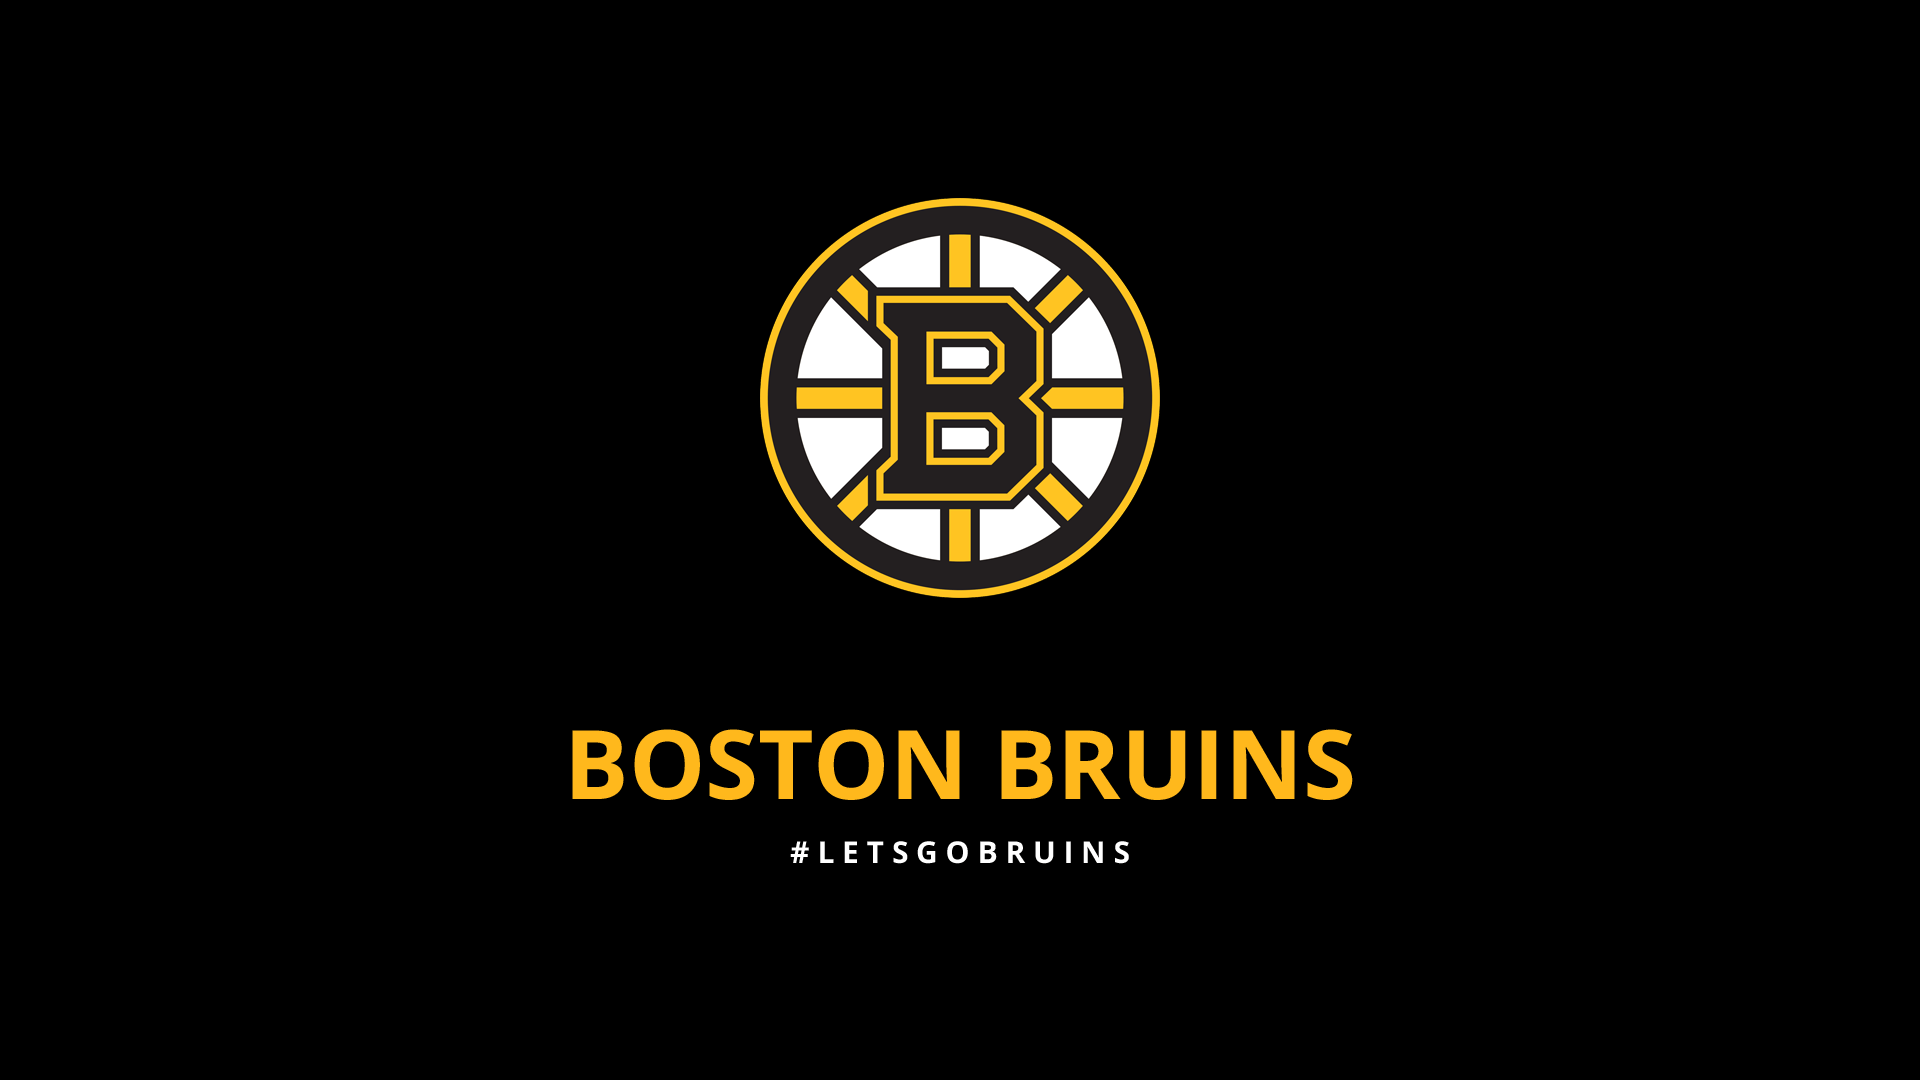 Minimalist Boston Bruins wallpaper